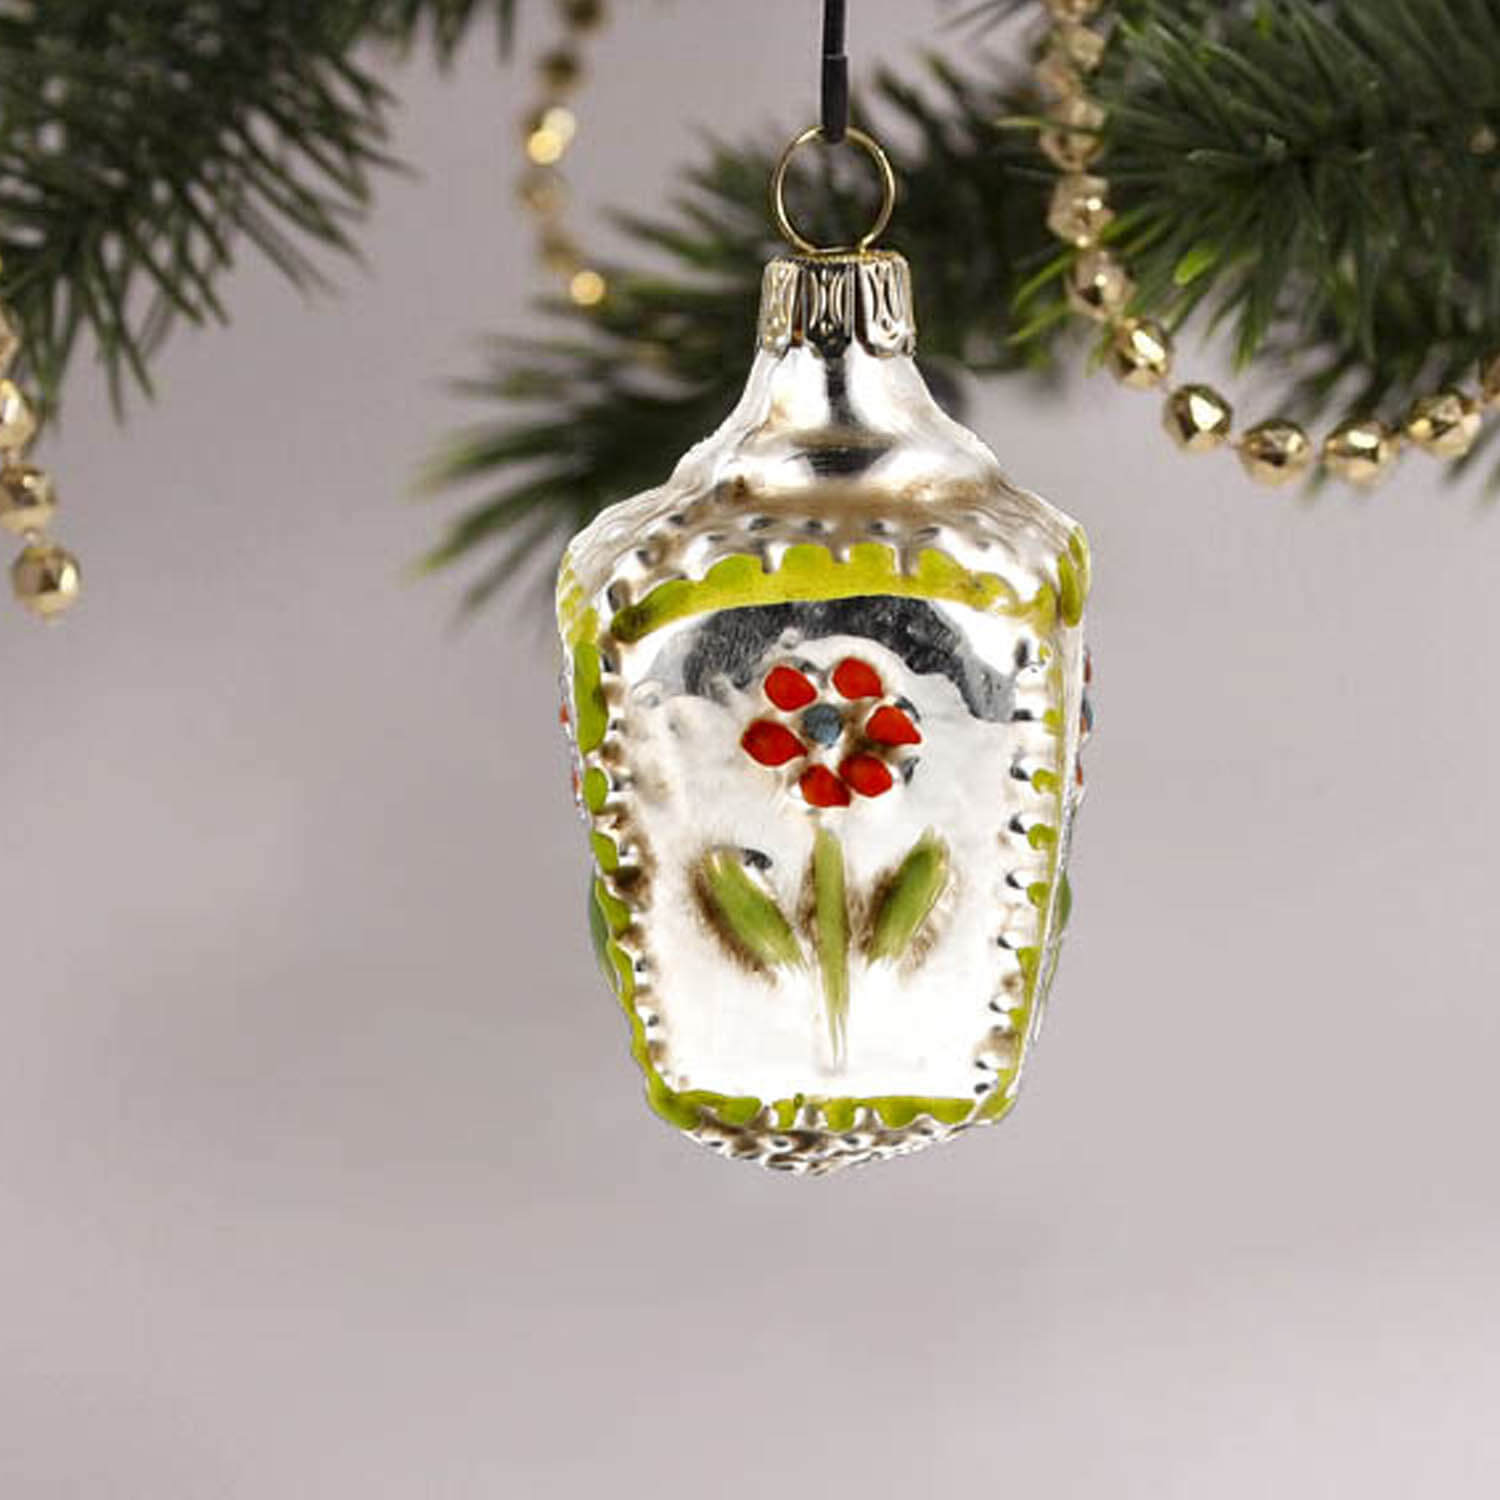 MAROLIN® - Miniature glass ornament "Basket with flowers"